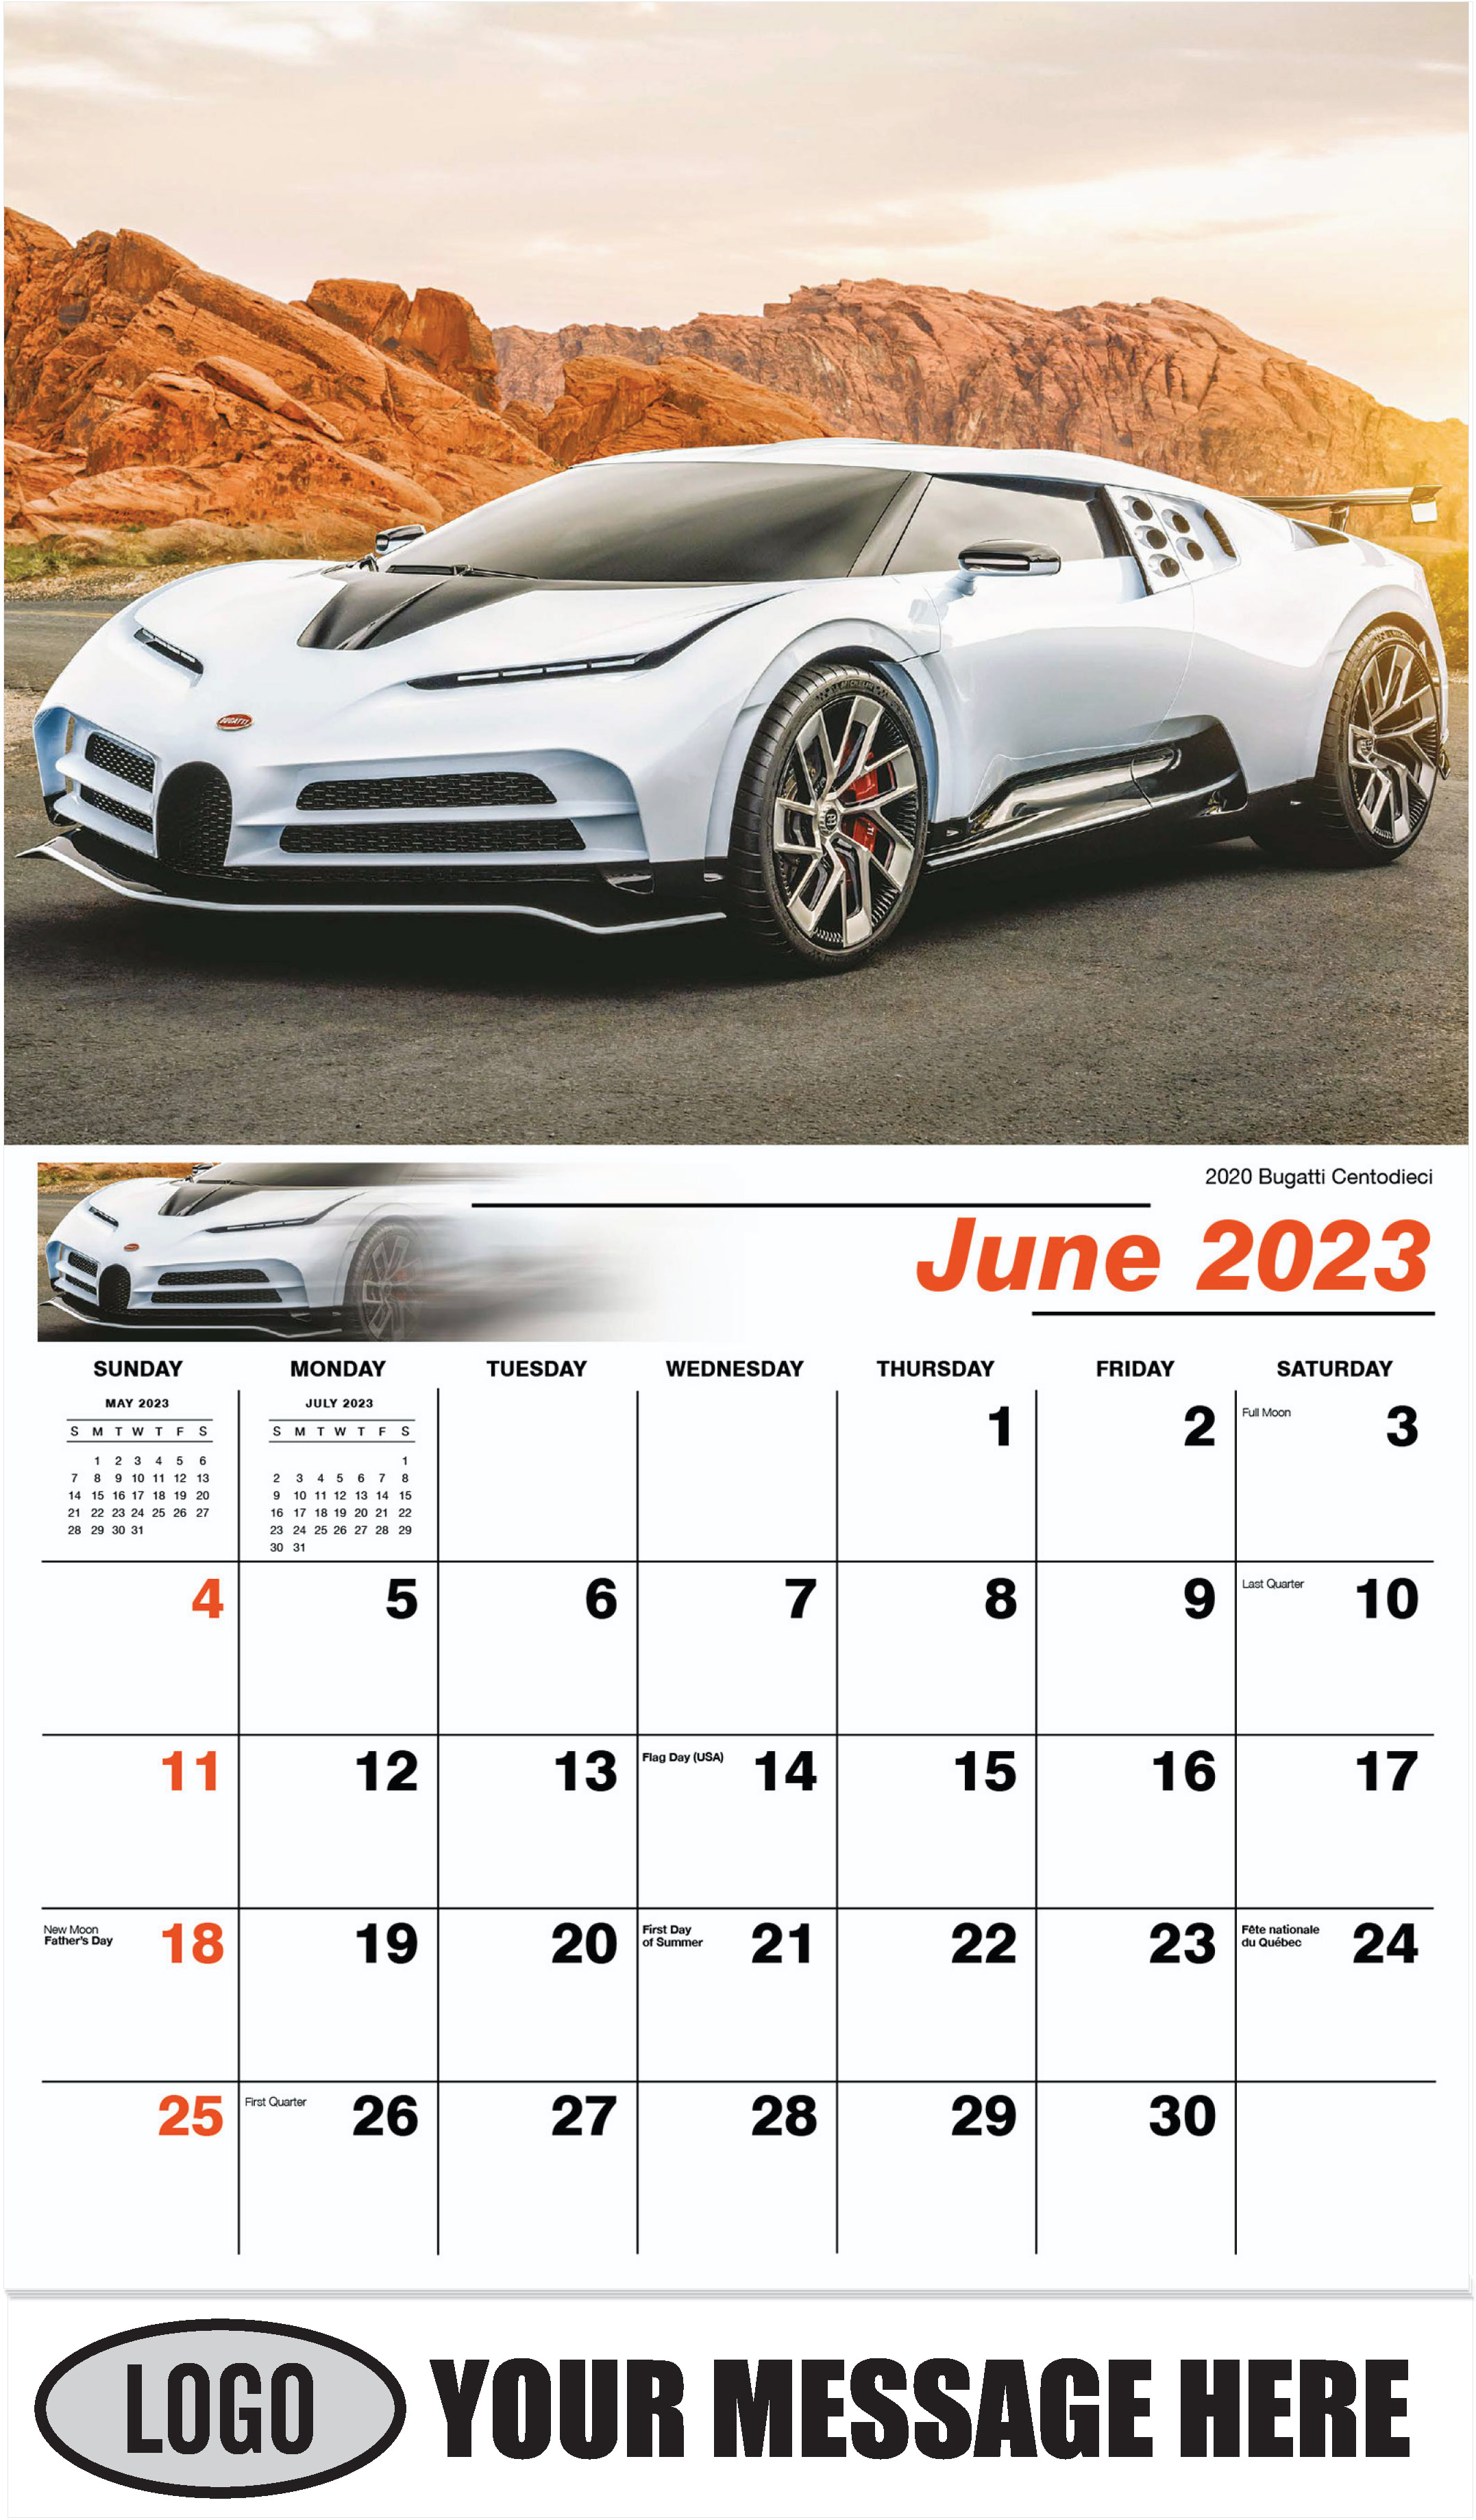 2020 Bugatti Centodieci - June - Exotic Cars 2023 Promotional Calendar